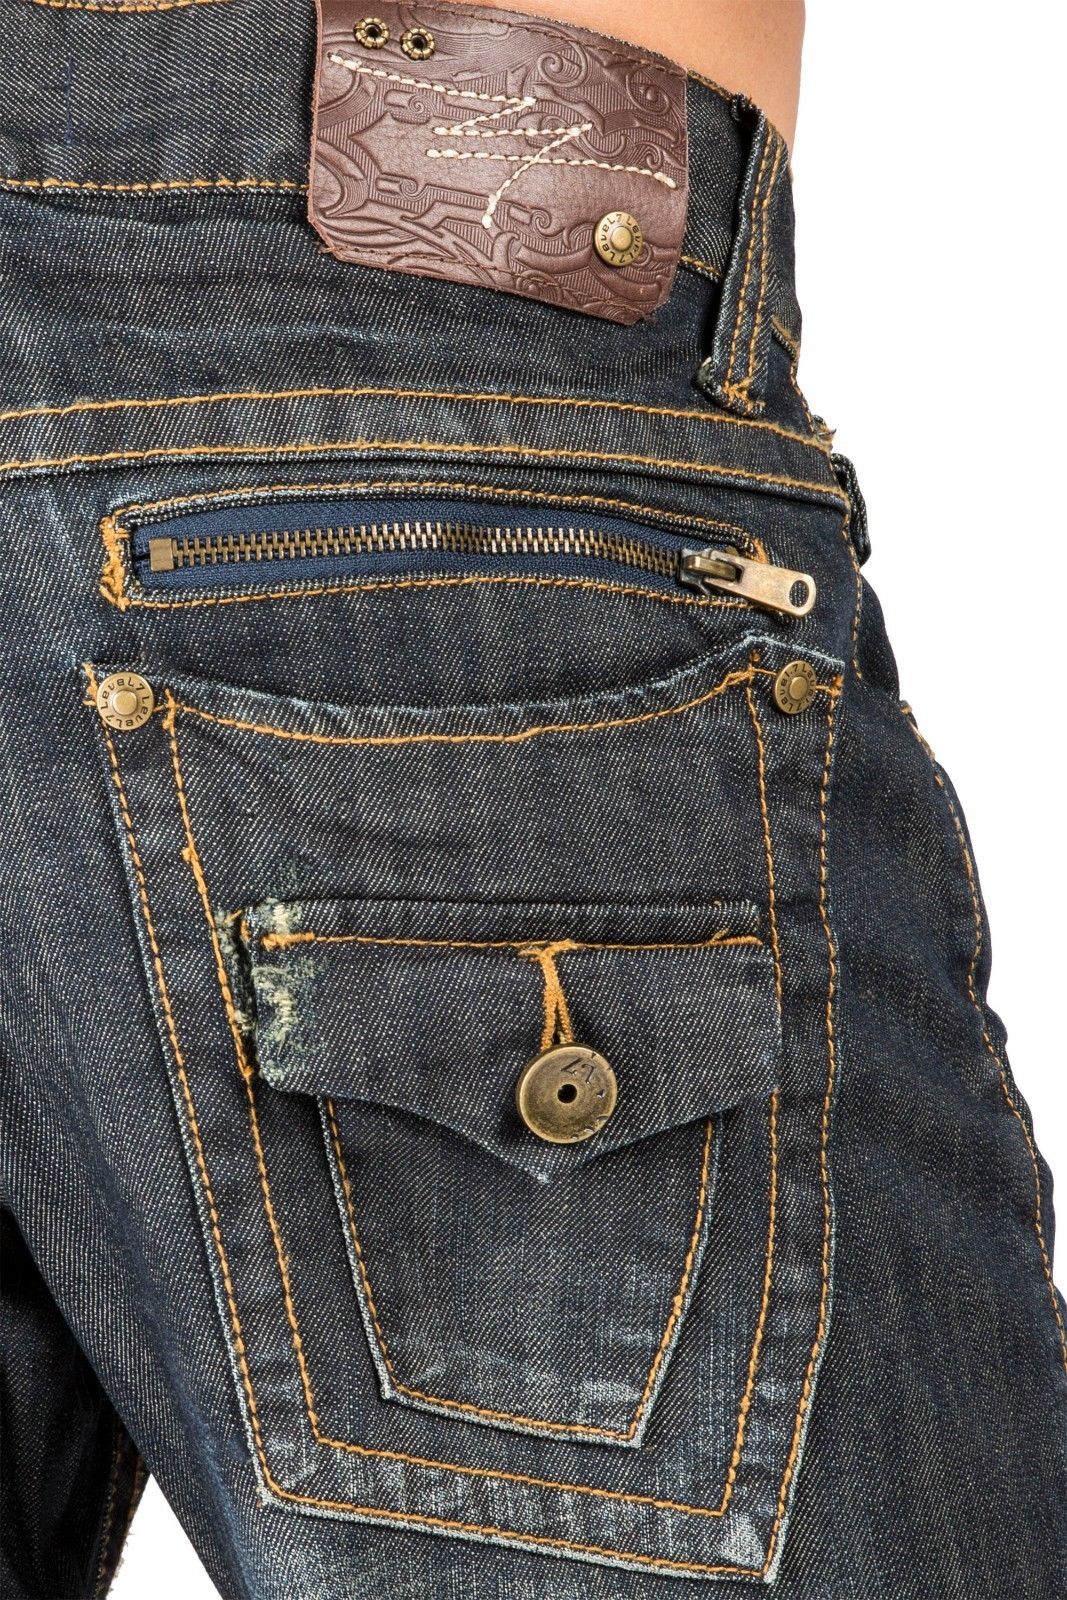 Level 7 Men's Relaxed Bootcut Dark Vintage Jean Zipper Pockets Premium Denim  – Level 7 Jeans